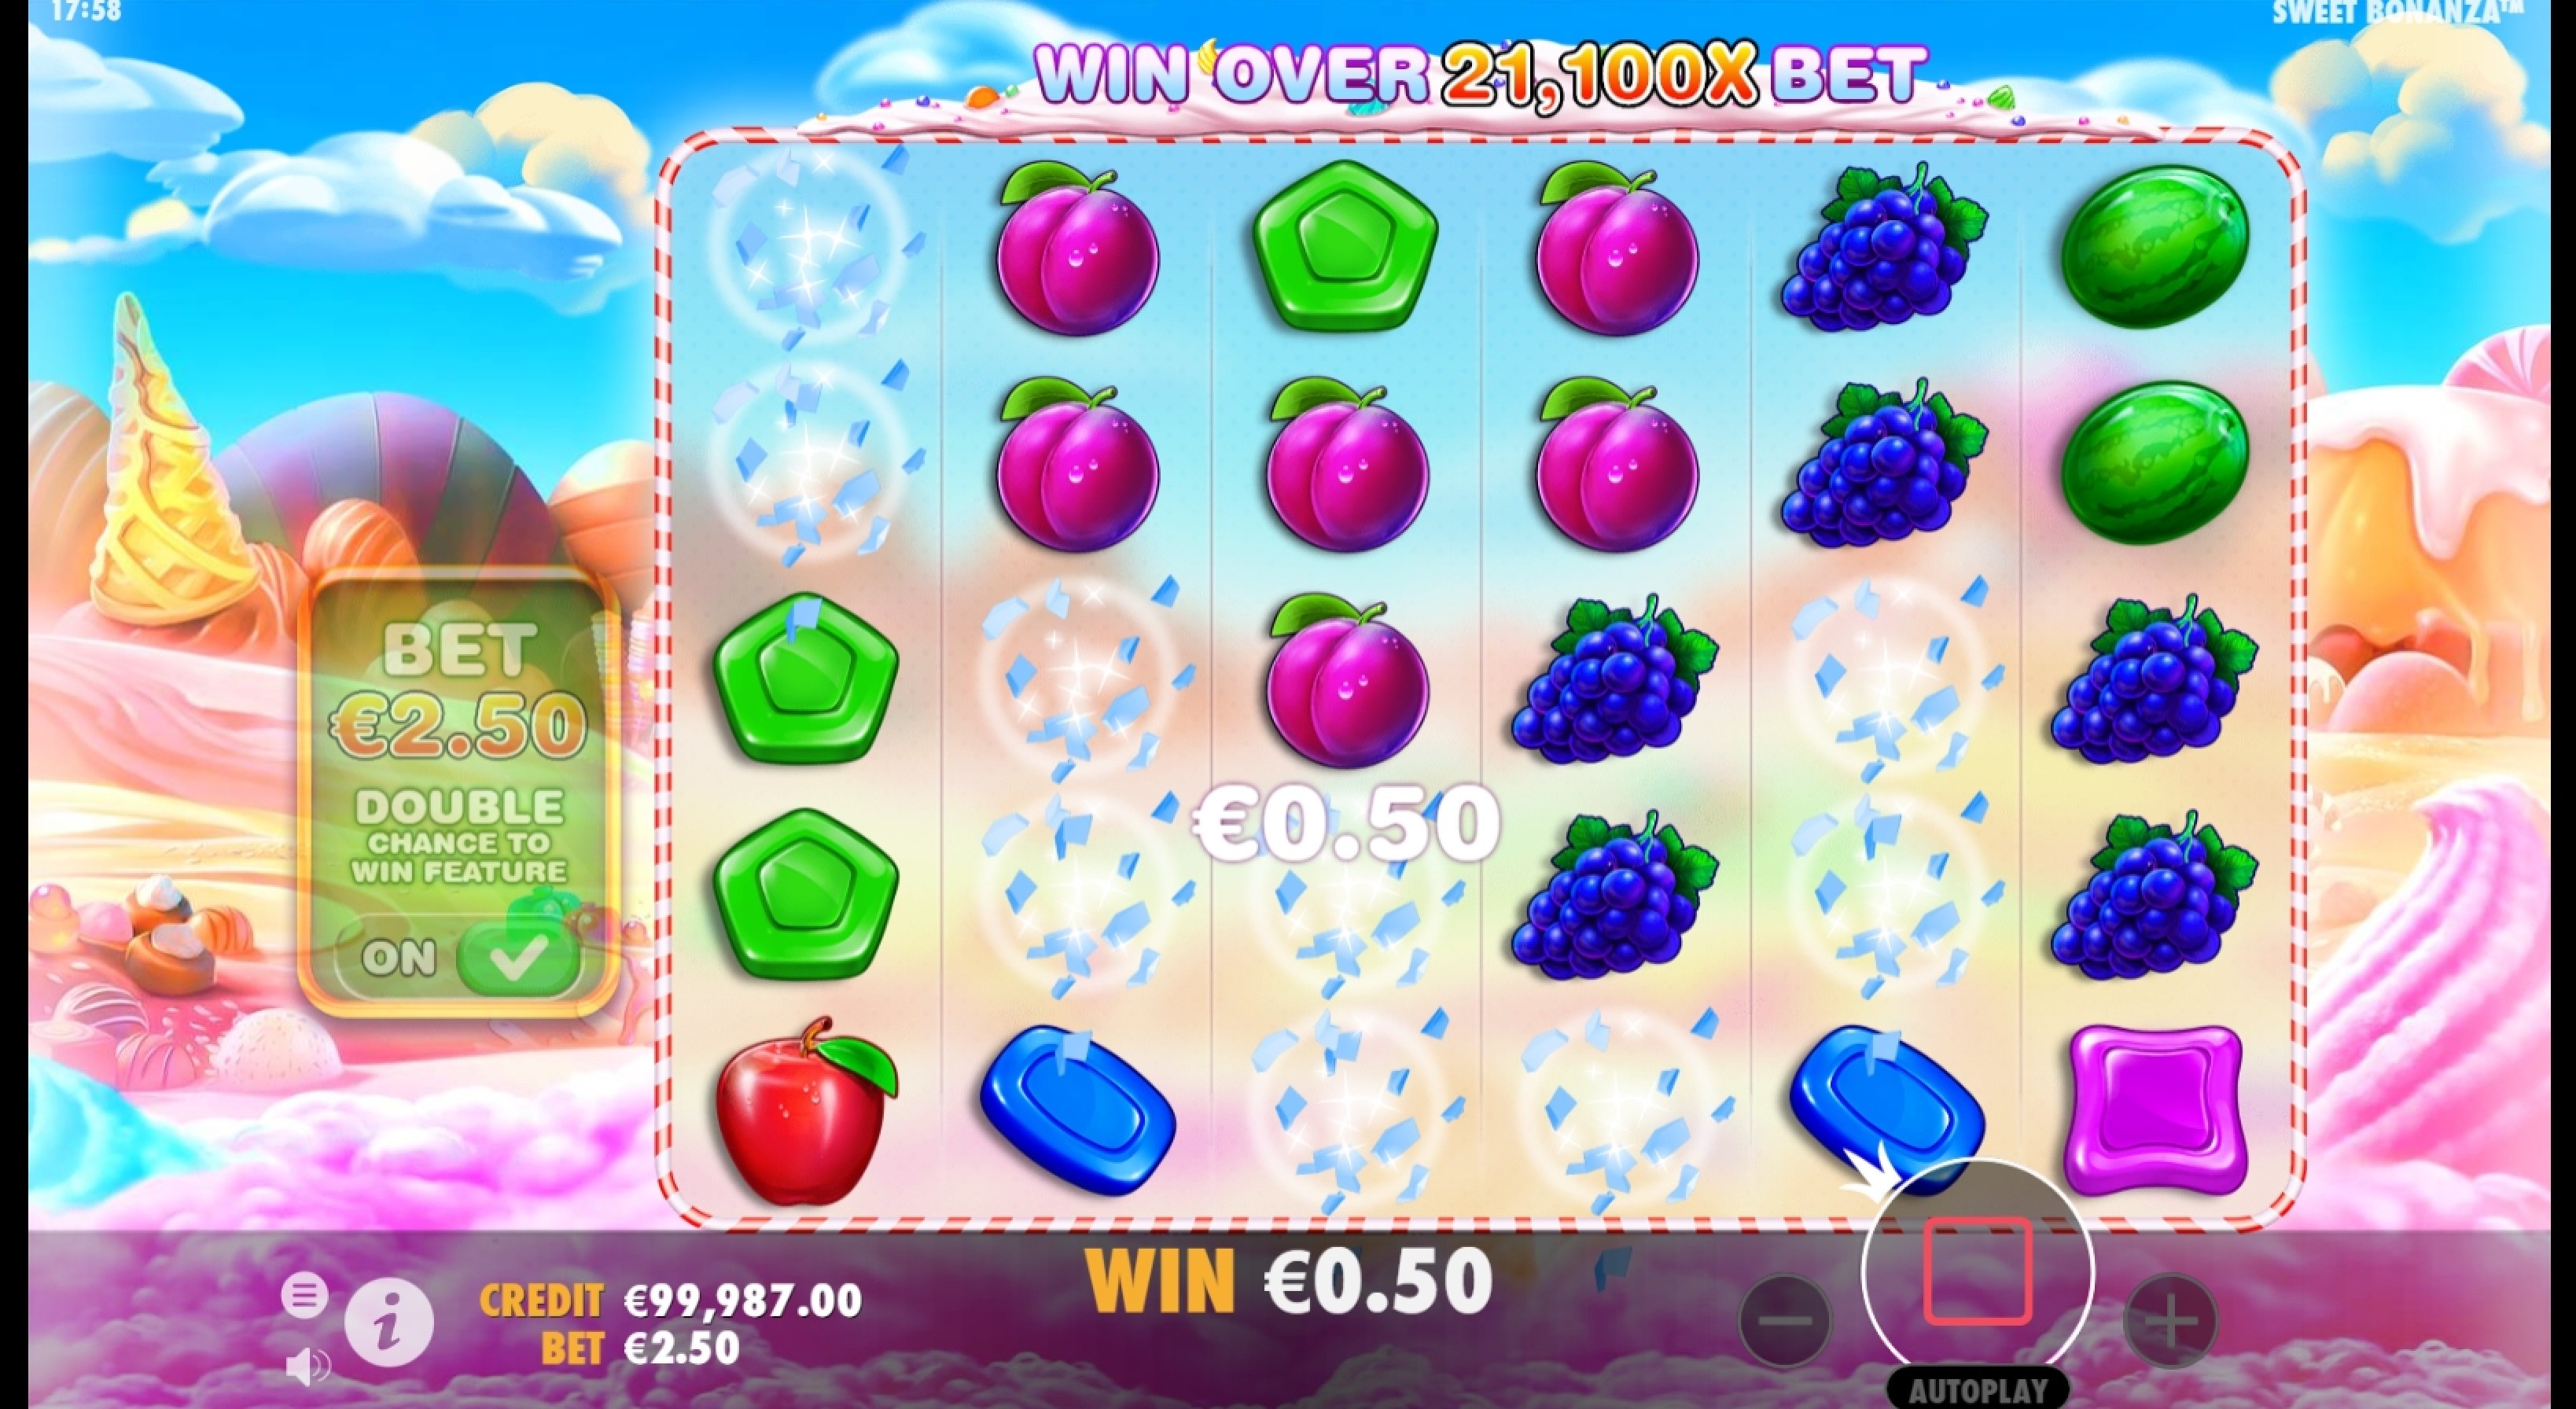 Win Money in Sweet Bonanza Free Slot Game by Pragmatic Play